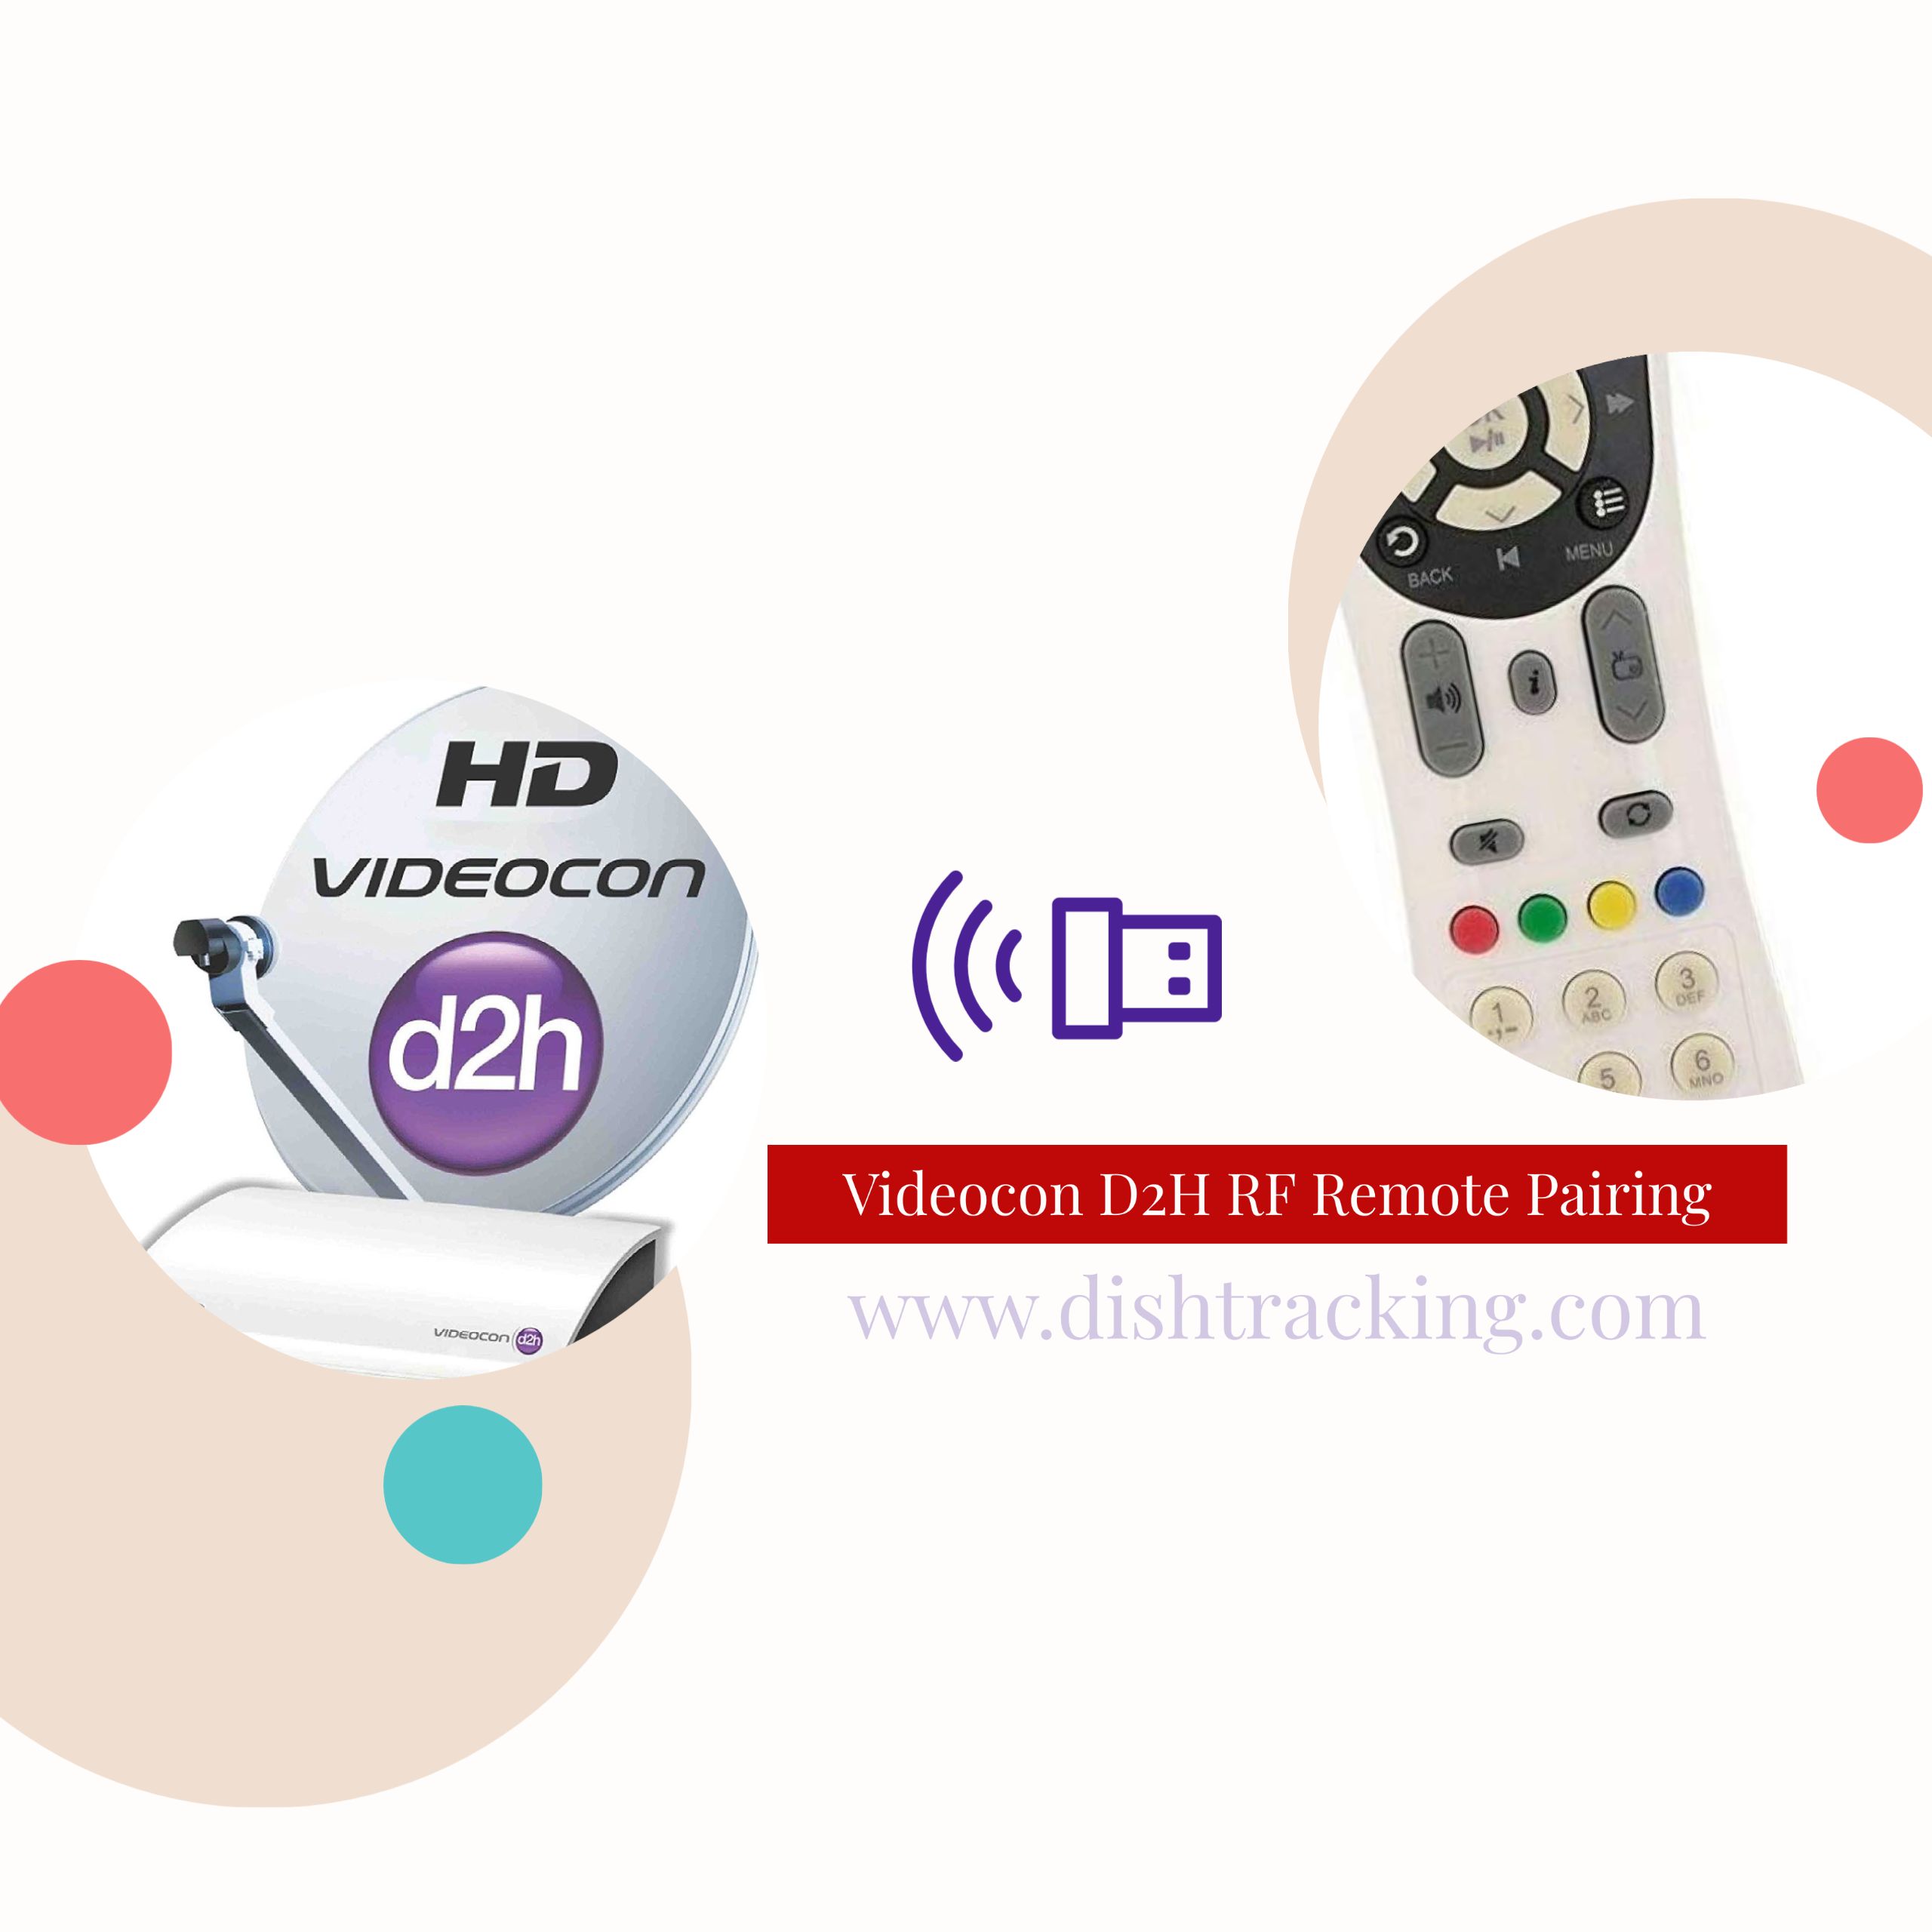 Videocon D2H Home Channel Hide Options Get Back Last Viewed